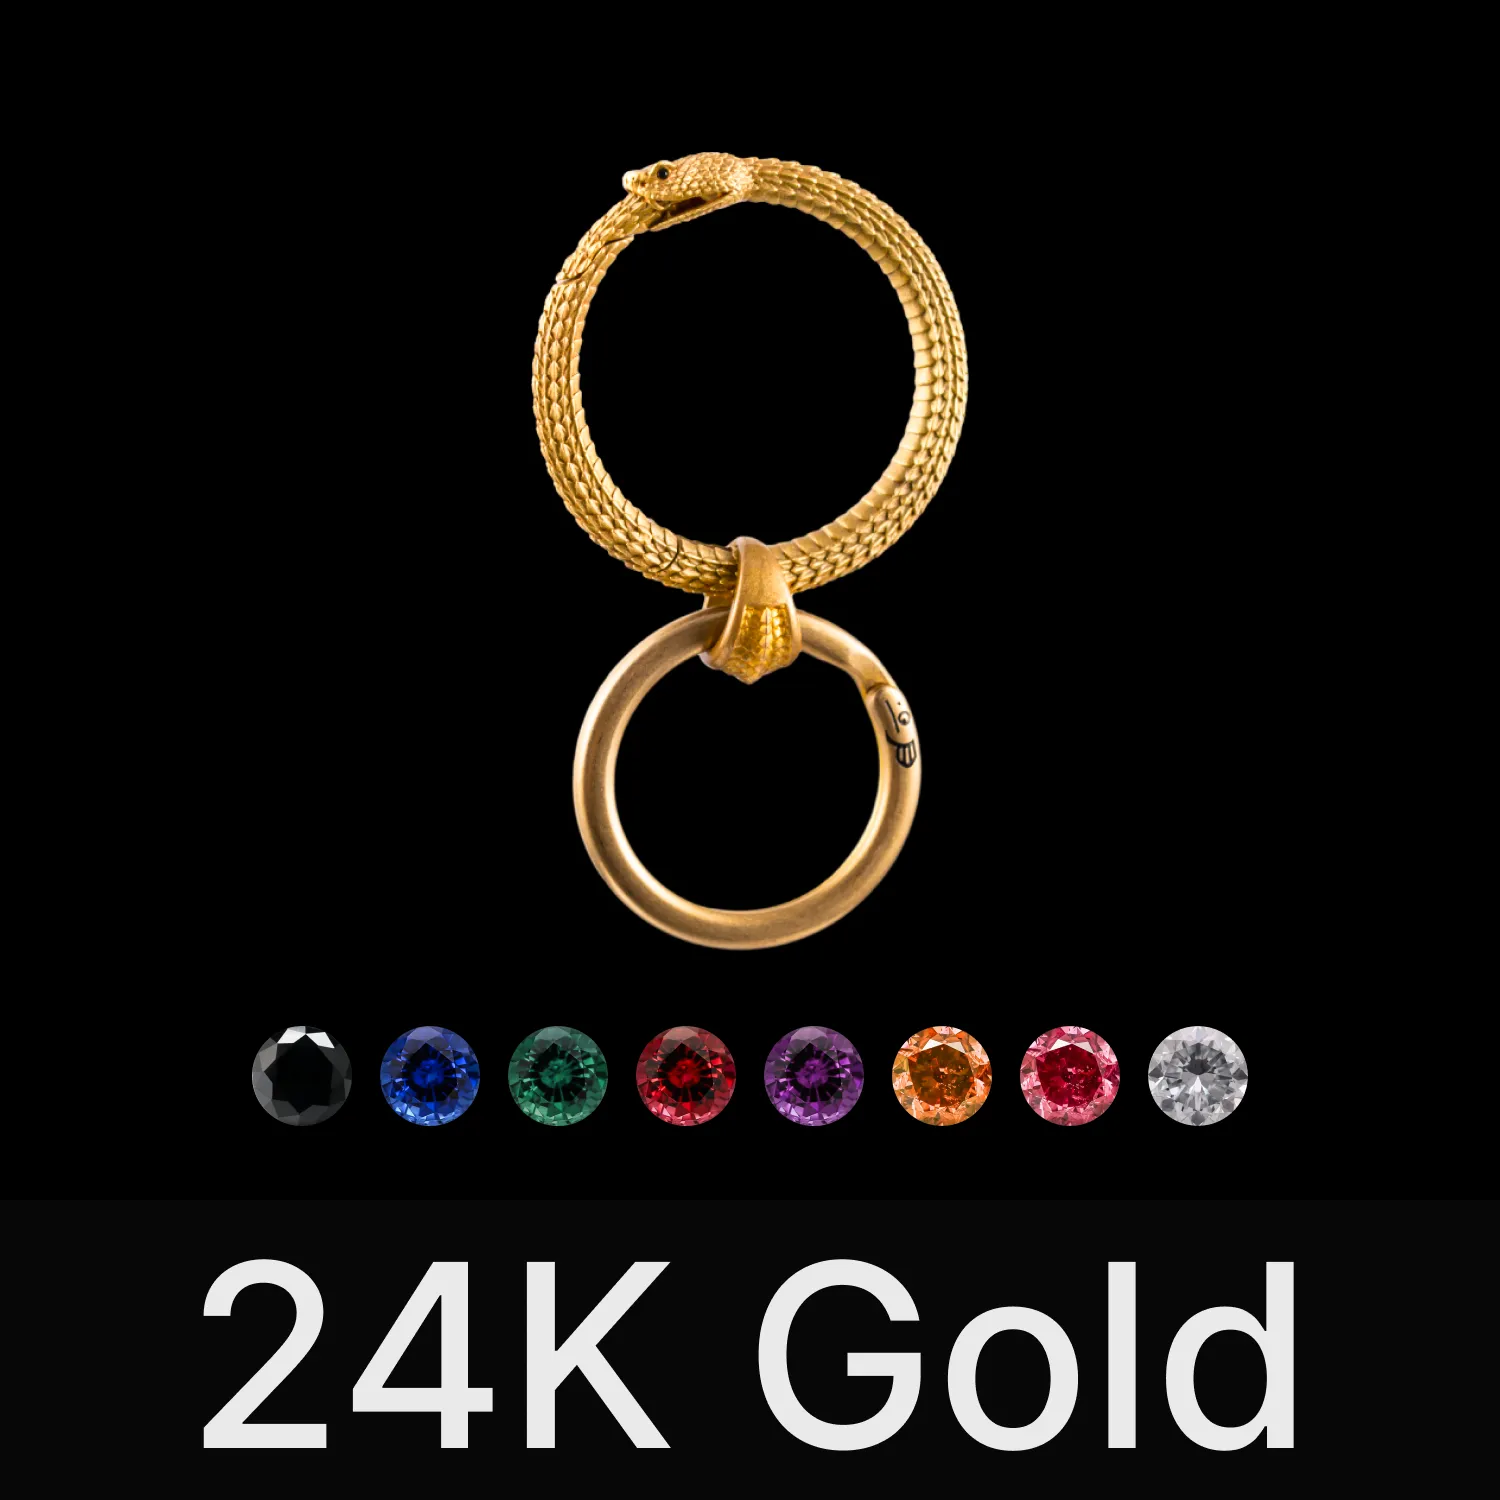 Ouroboros Keychain 24K Gold & Gemstone